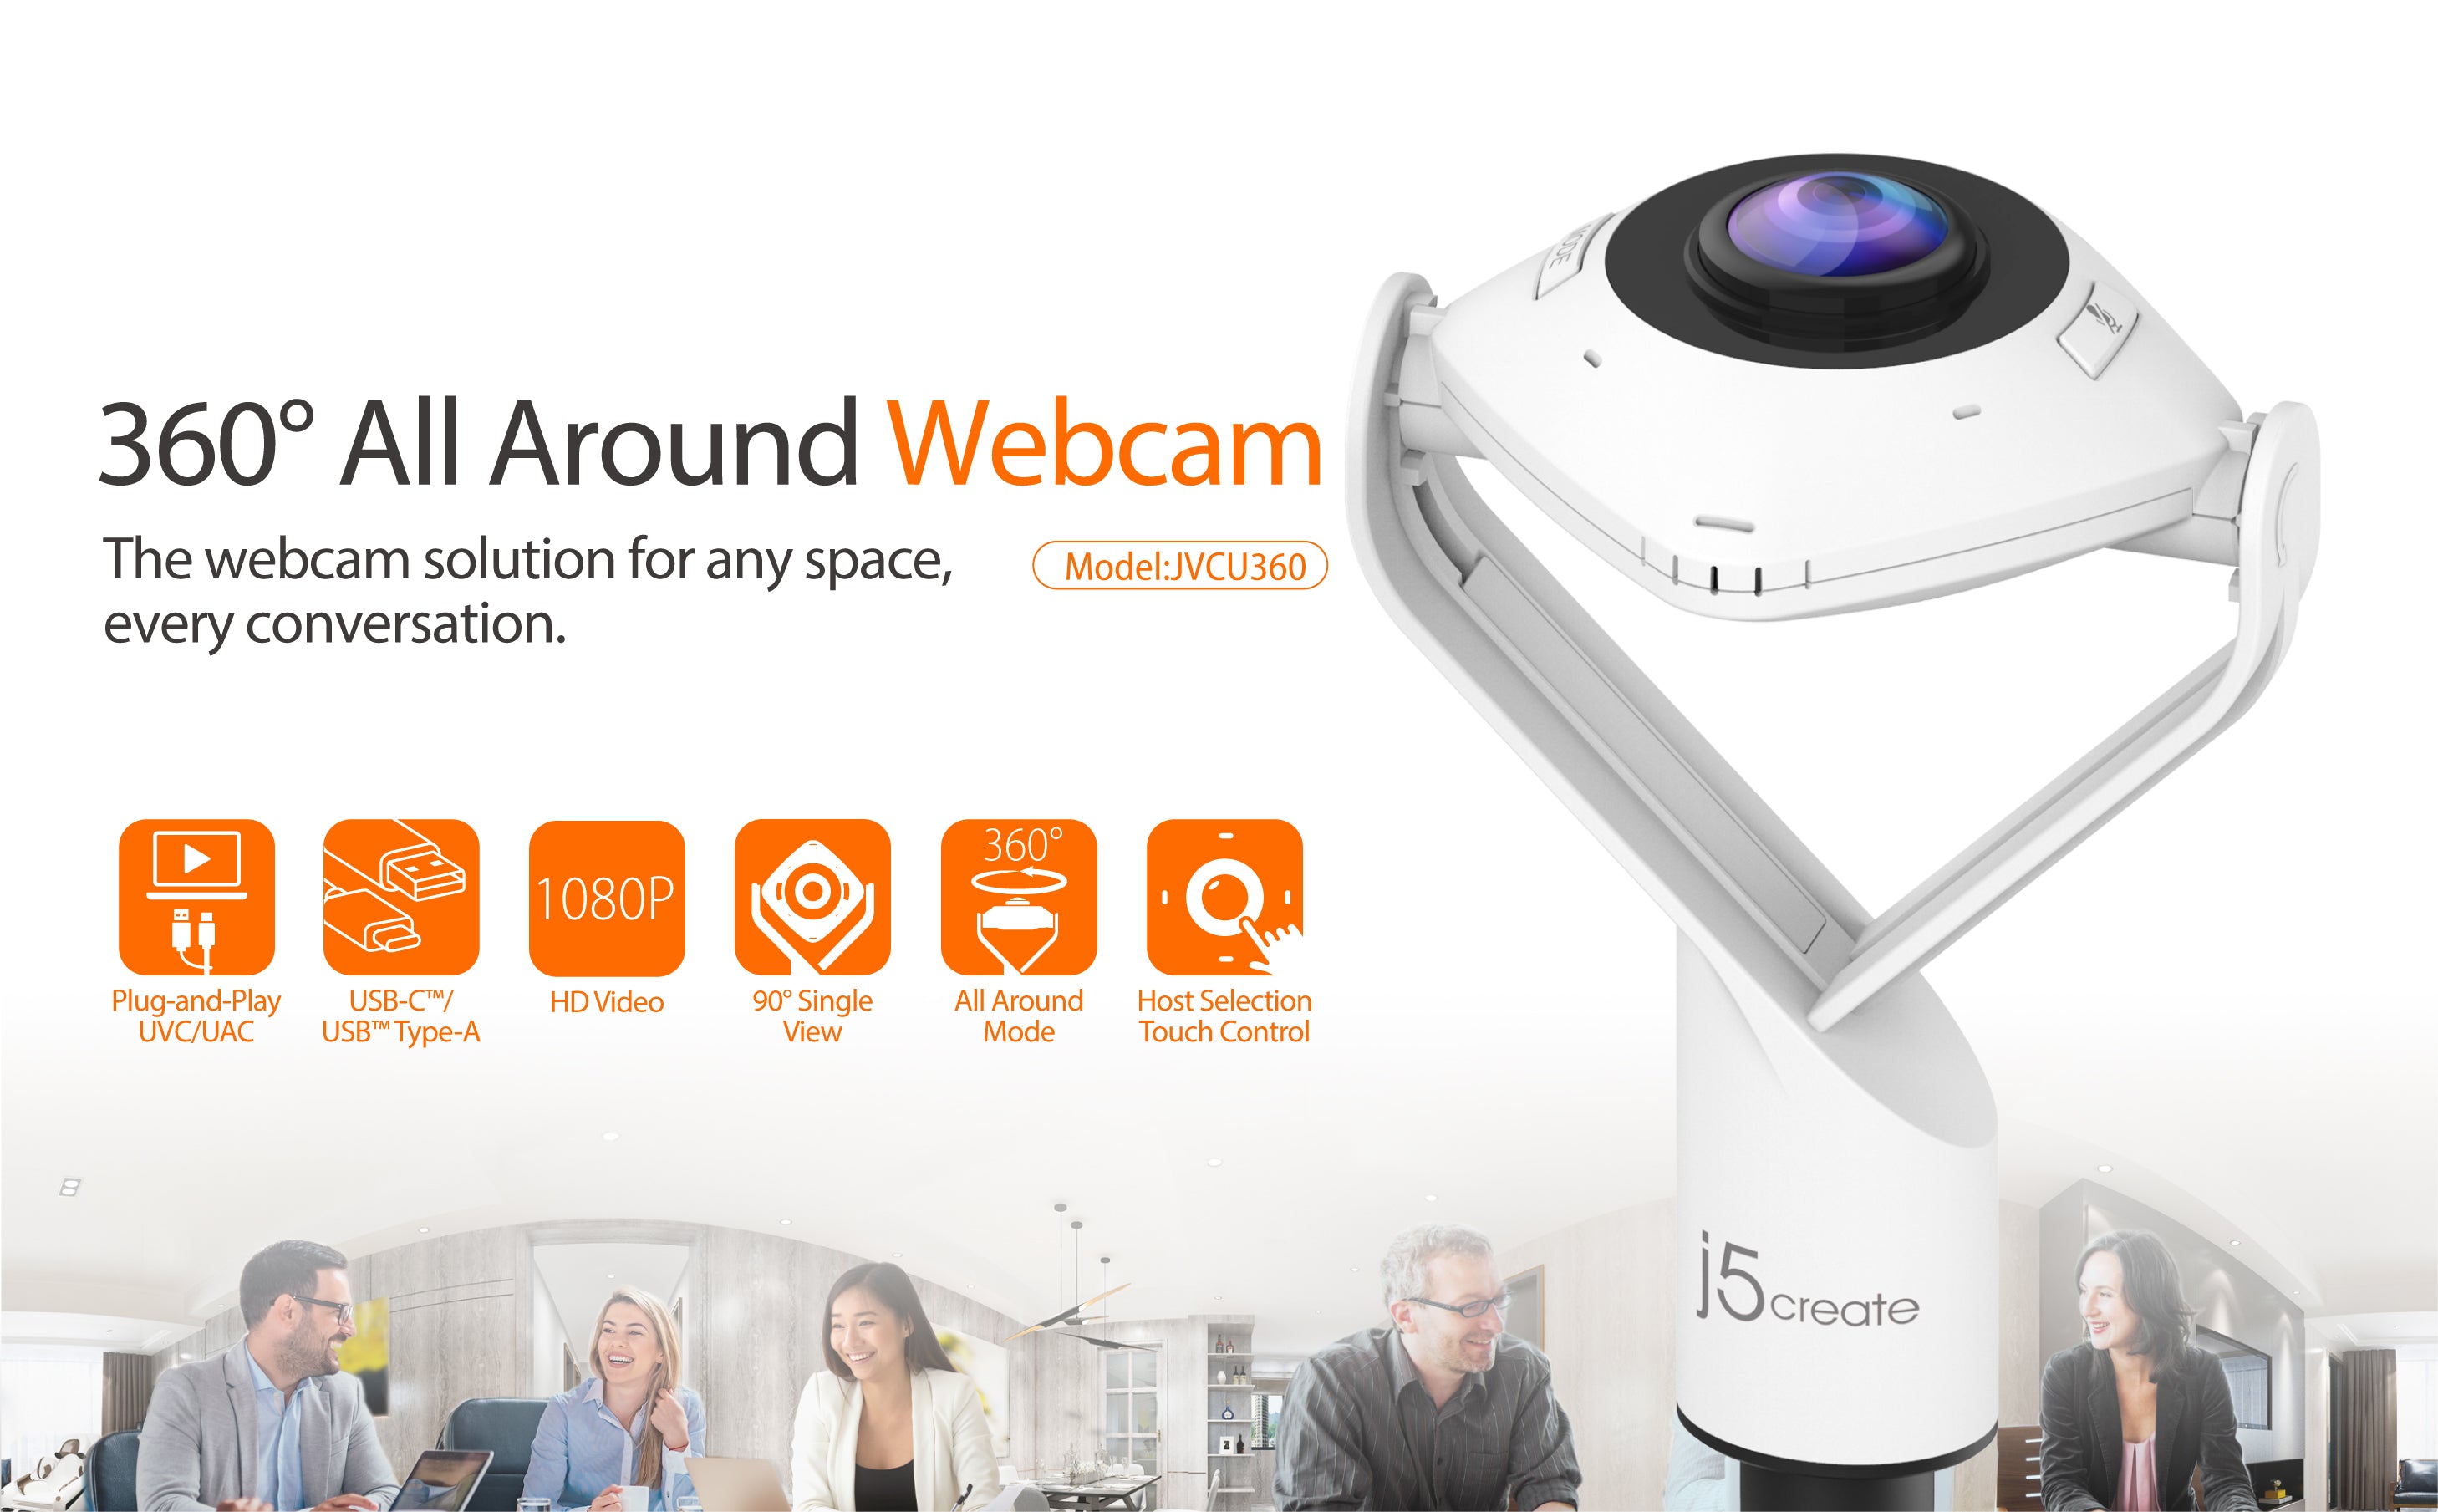 360° All Around Webcam – j5create